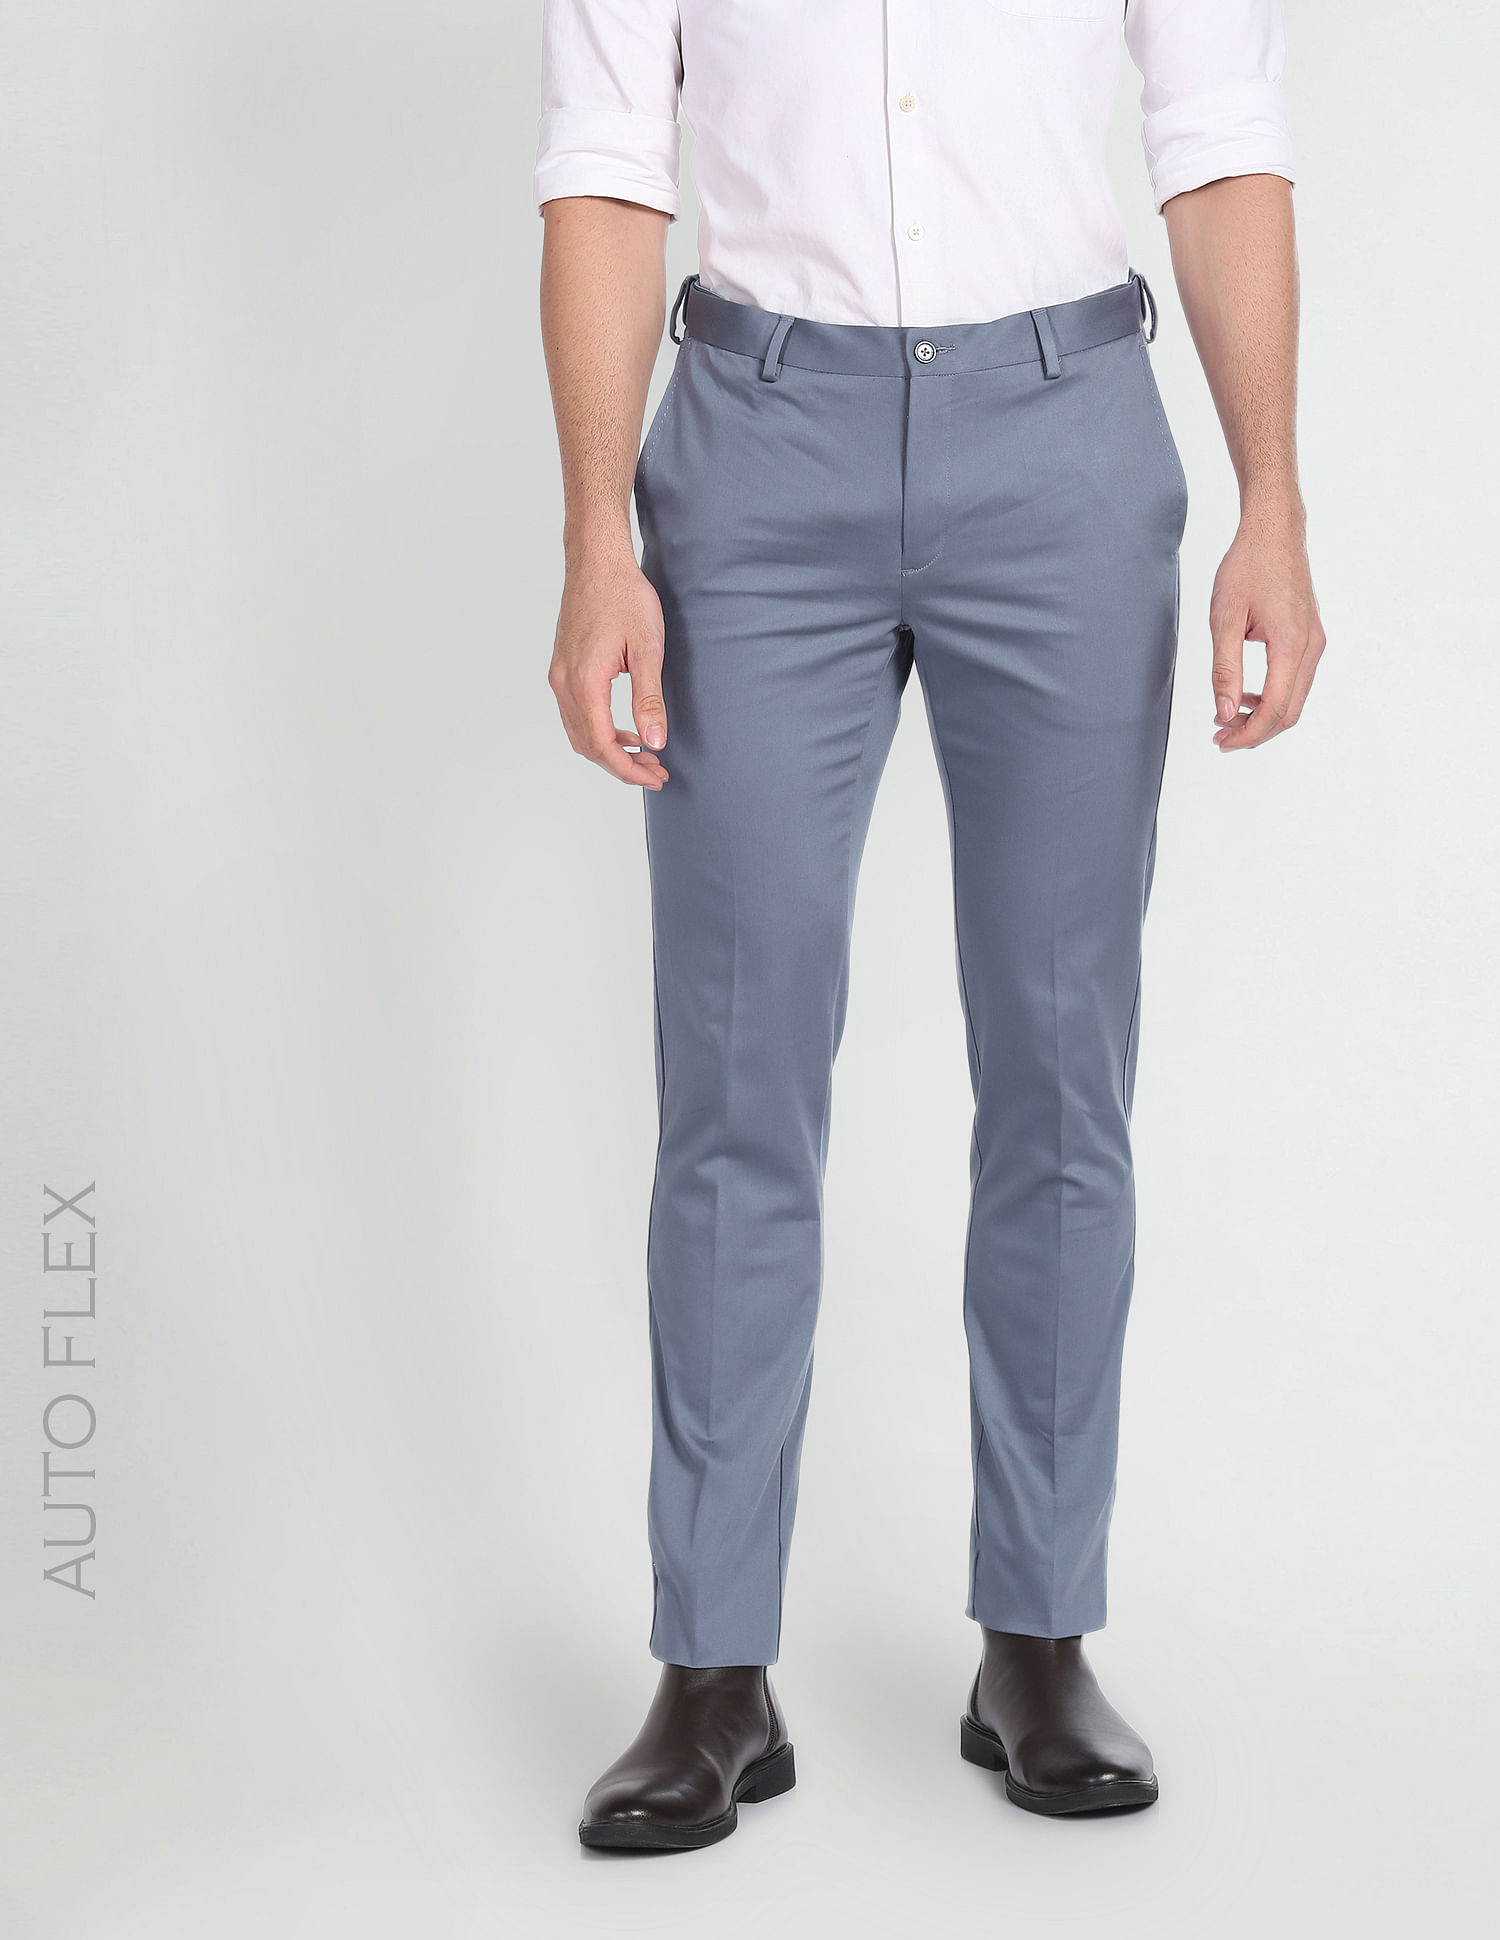 Arrow Men's Herringbone Flat Front Pant, Coal, 30x30 at Amazon Men's  Clothing store: Business Suit Pants Separates